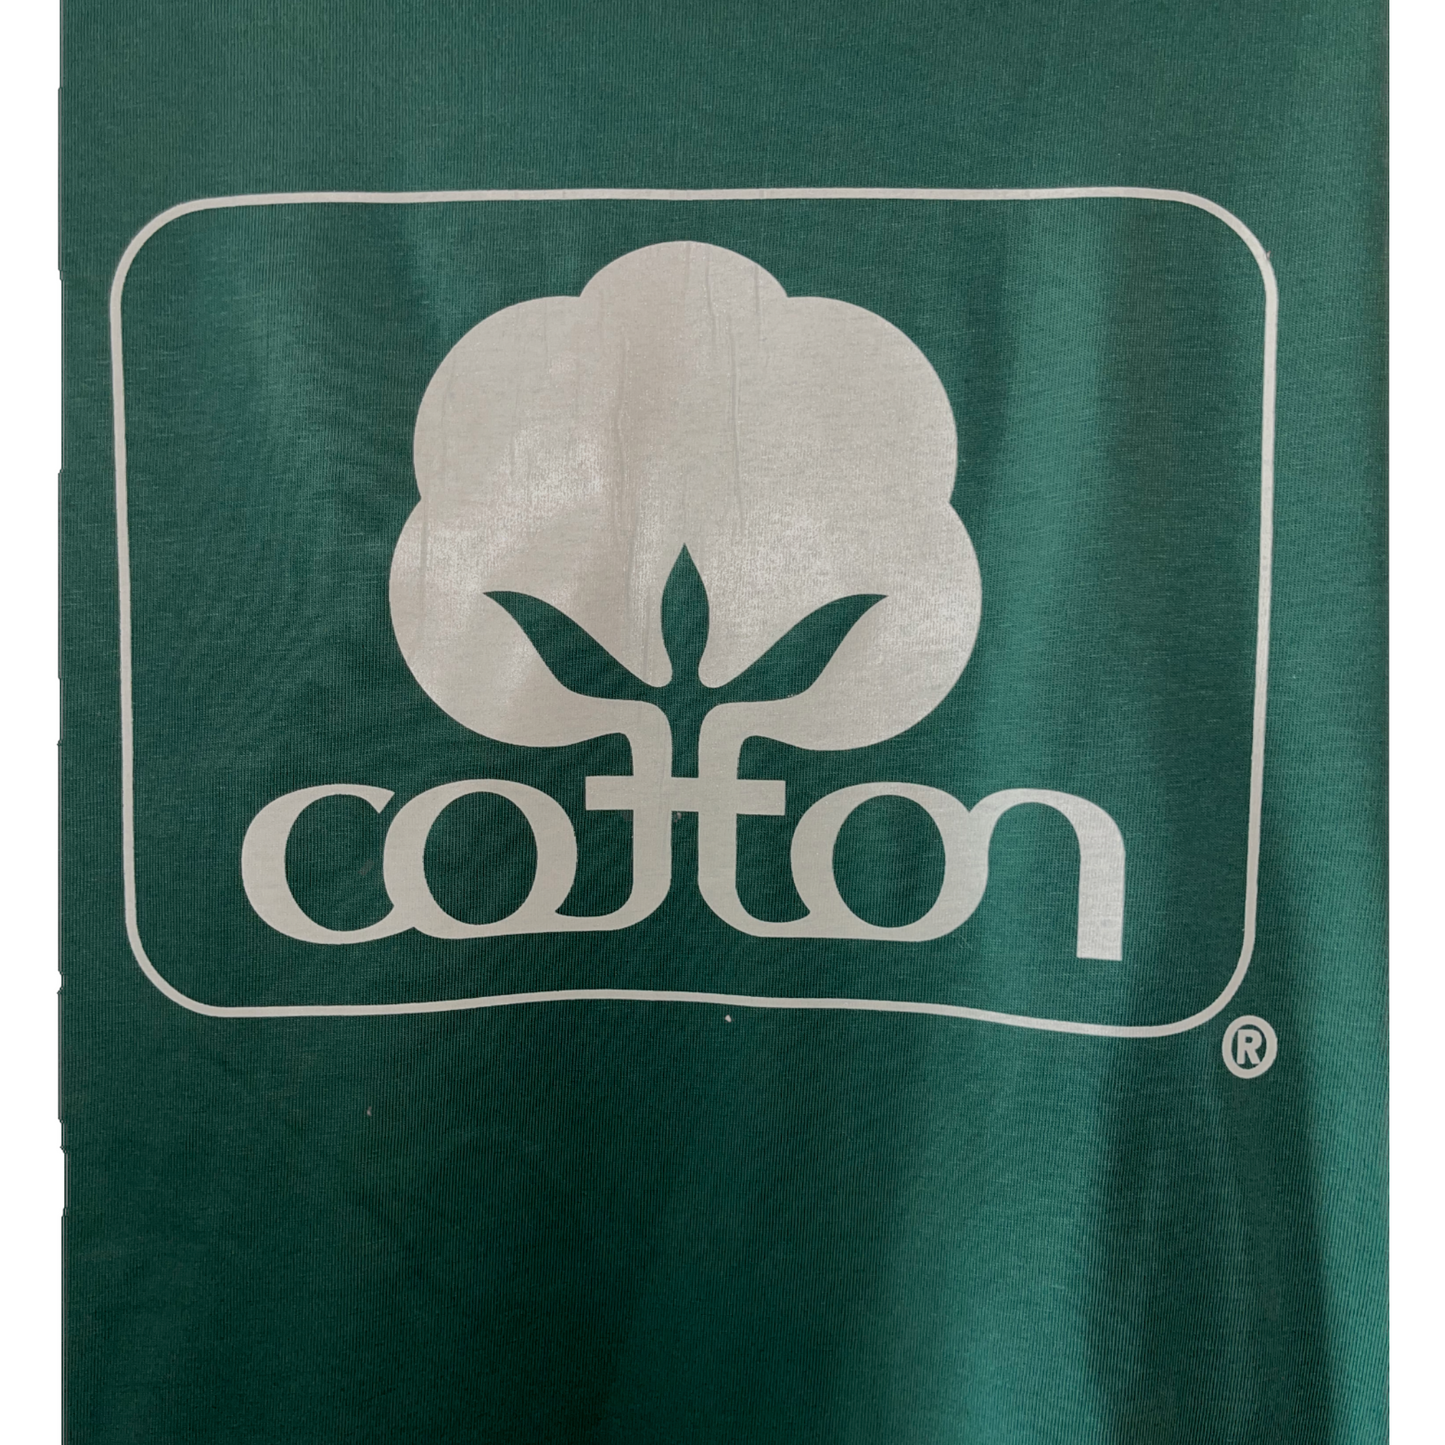 Licensed Cotton Inc. Jade Green T-shirt